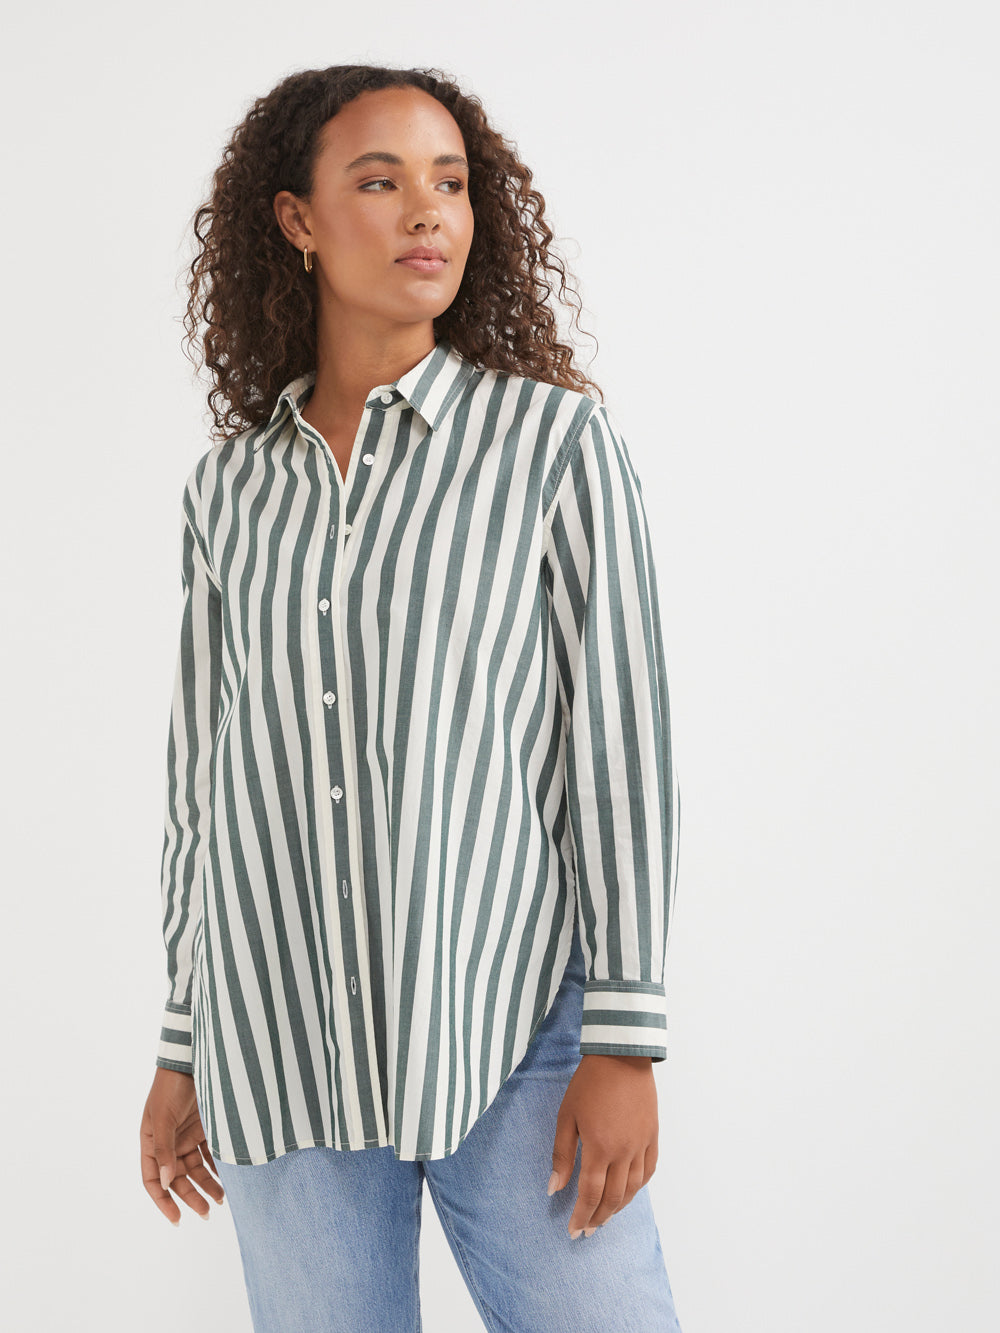 The Cotton Poplin Stripe Shirt | Commonry